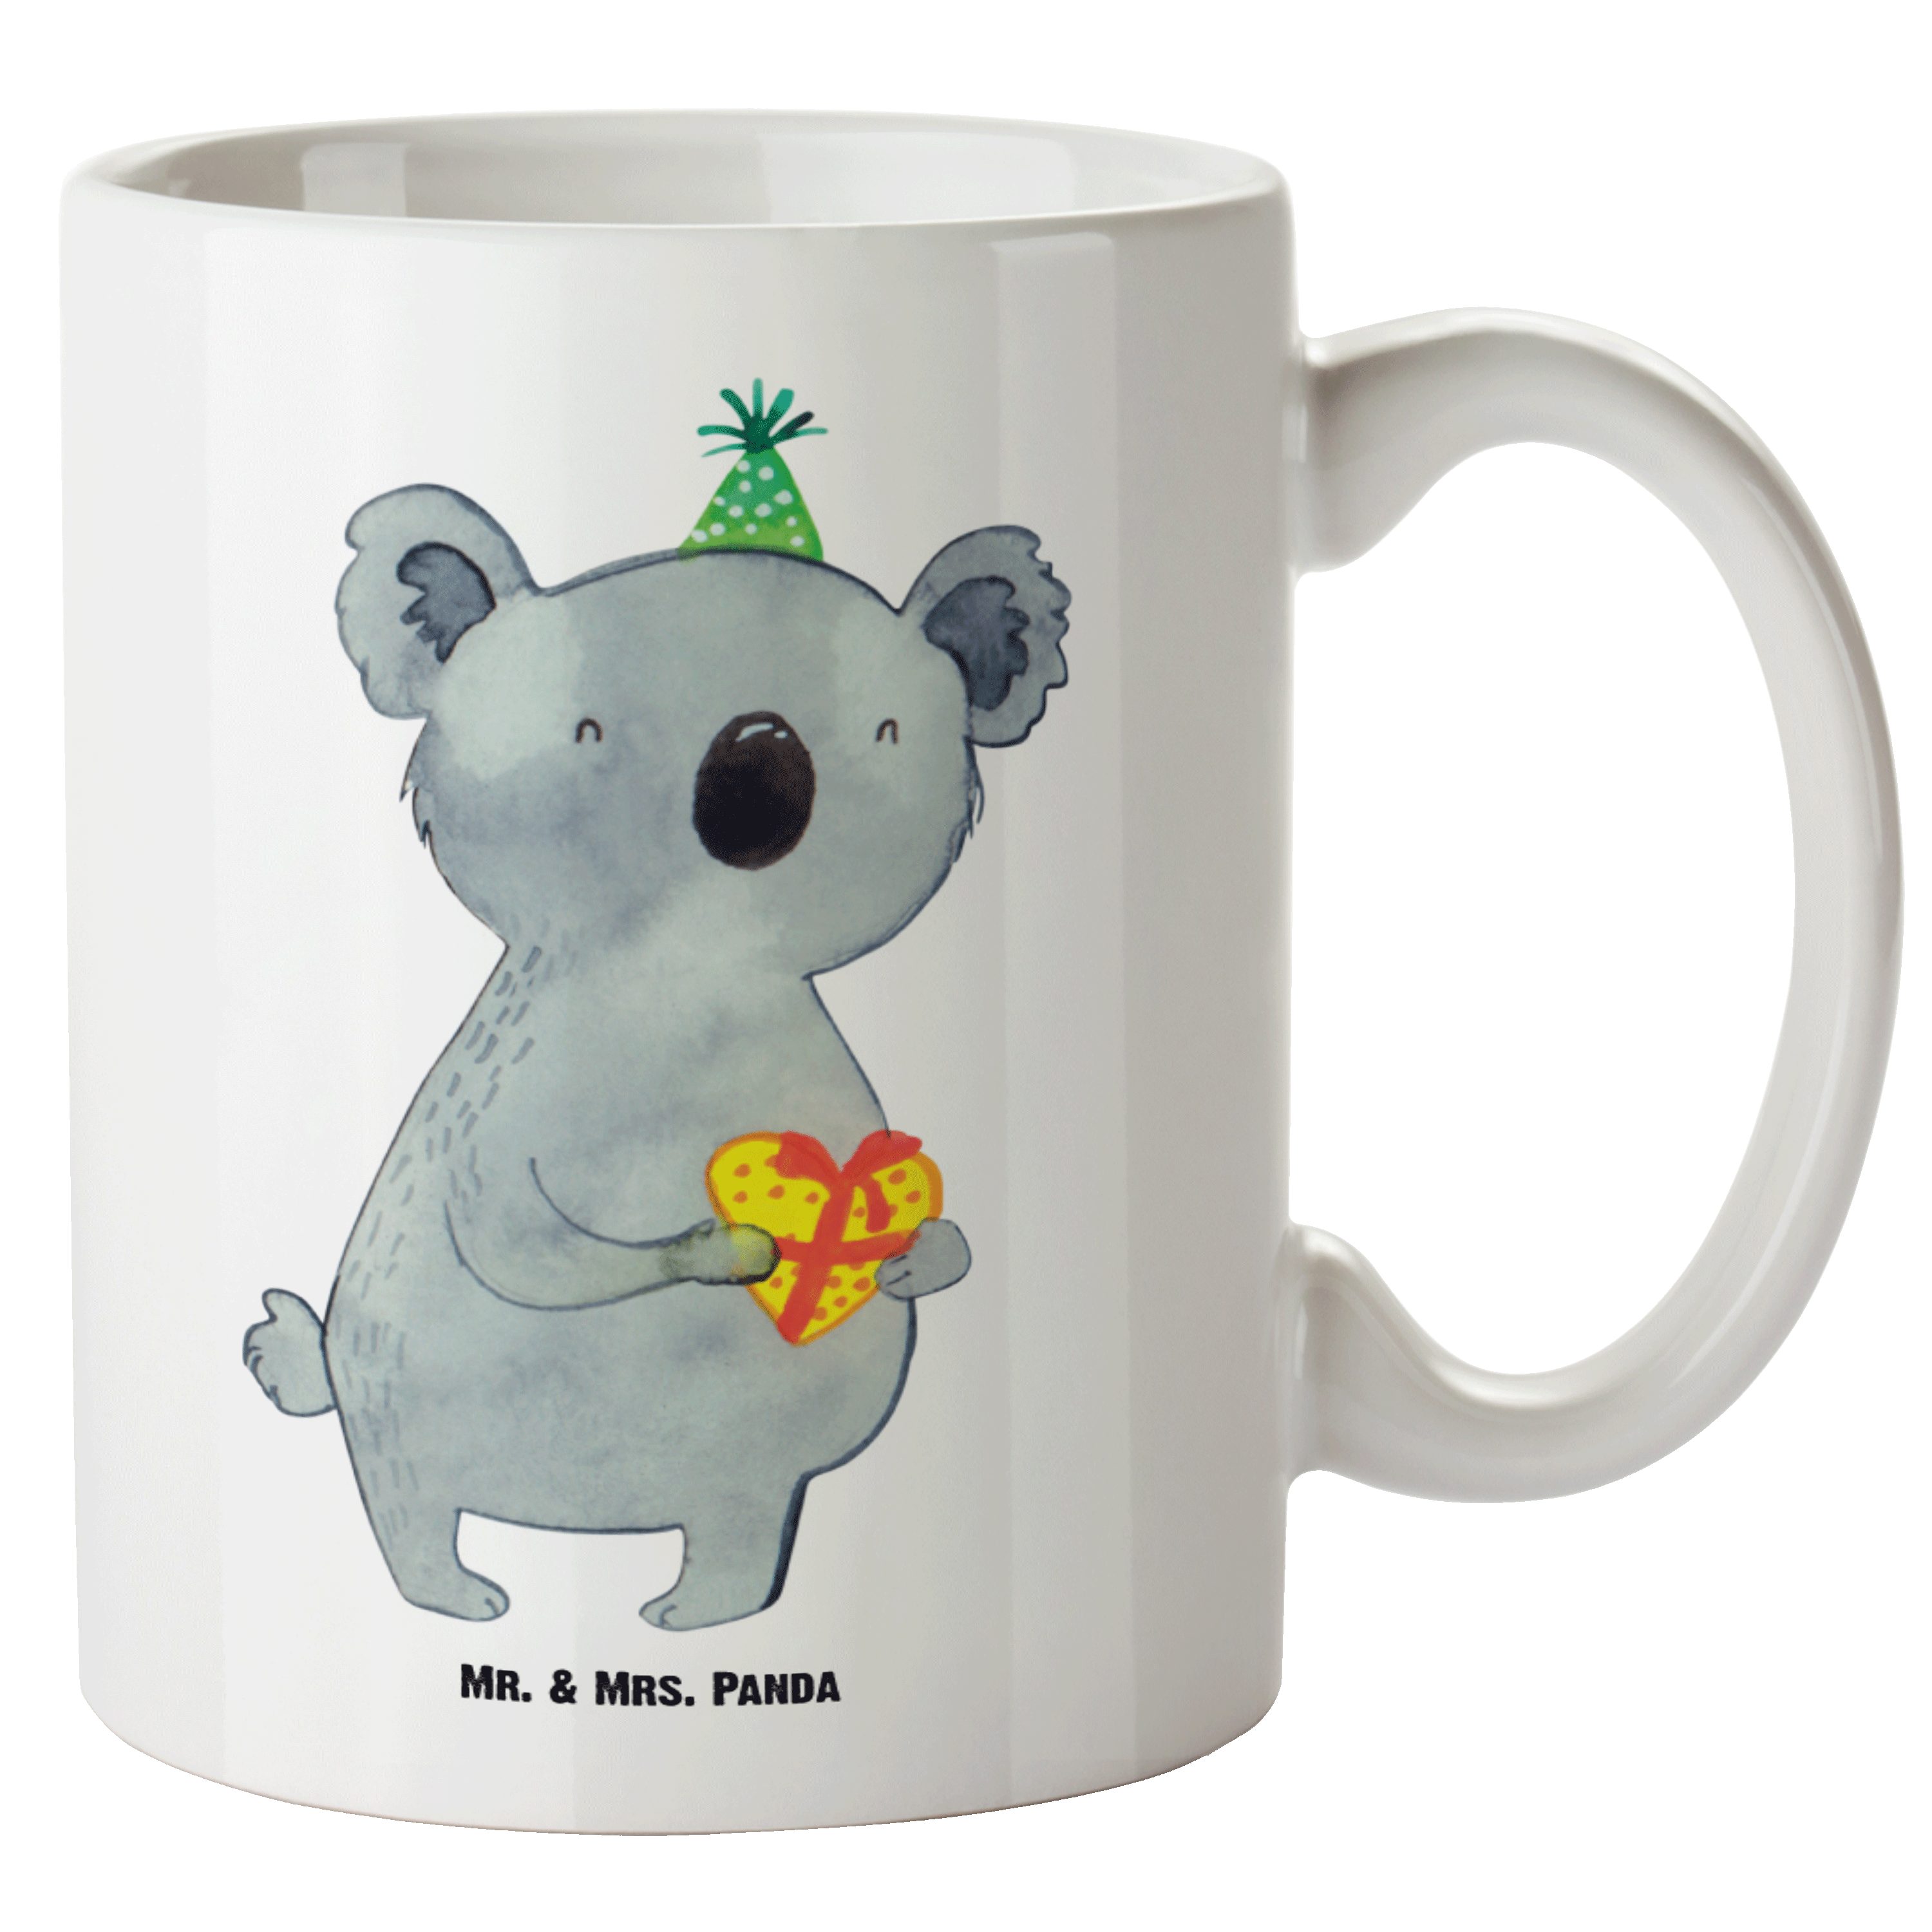 Mr. & Mrs. Panda Tasse Koala Geschenk - Weiß - Koalabär, Große Tasse, Party, Geburtstag, XL, XL Tasse Keramik